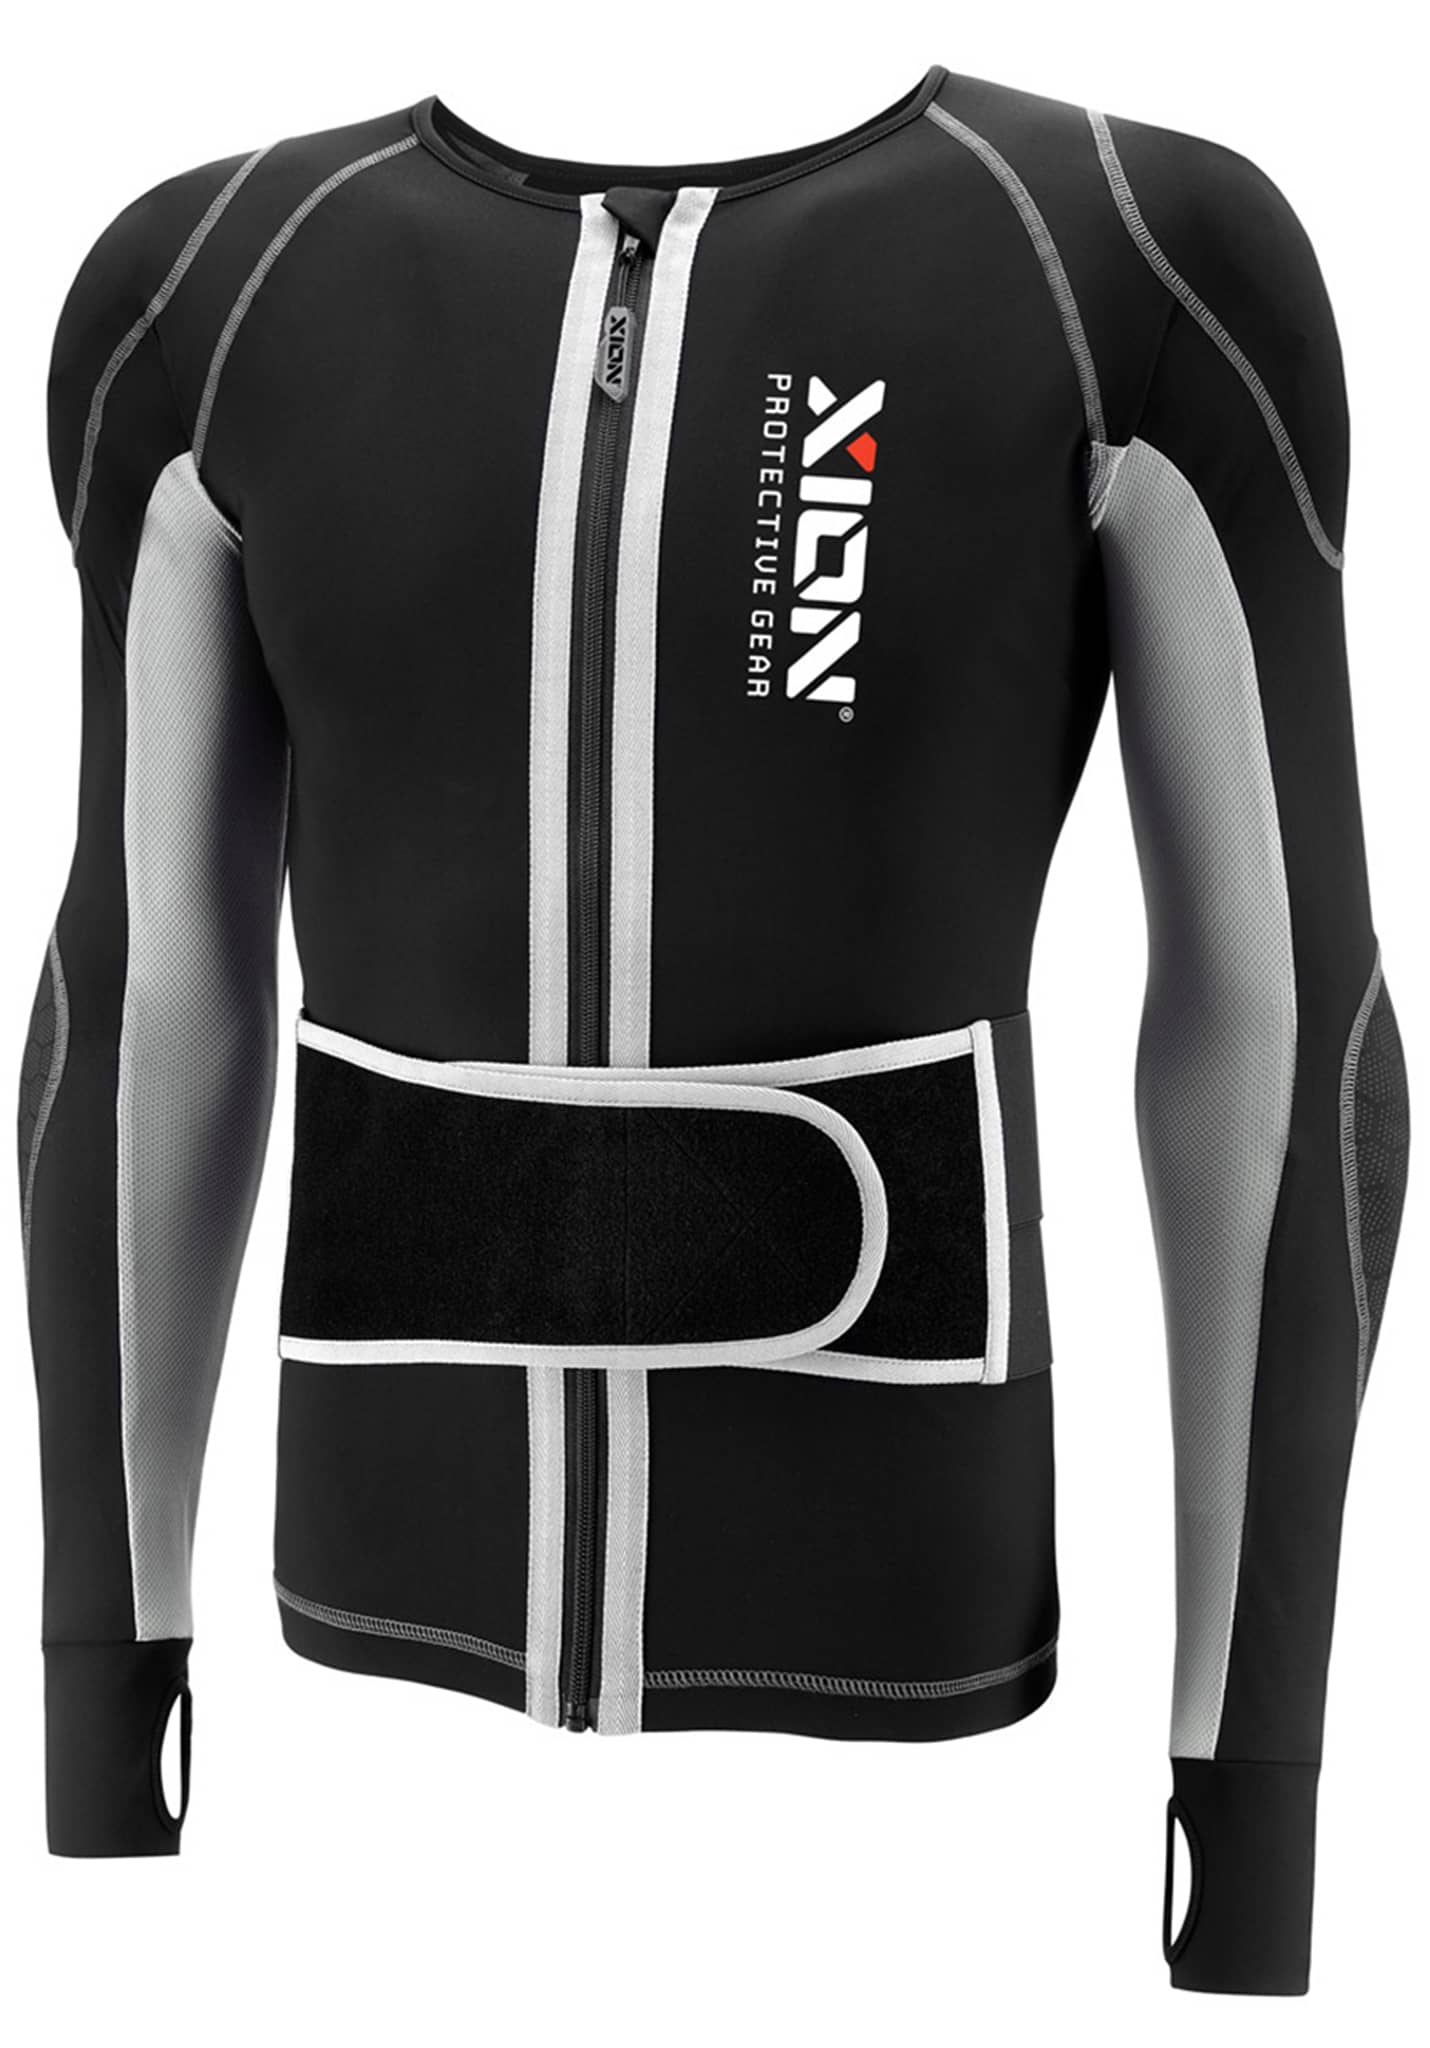 Xion Freeride Evo V1 Snowboard Protektoren black XL